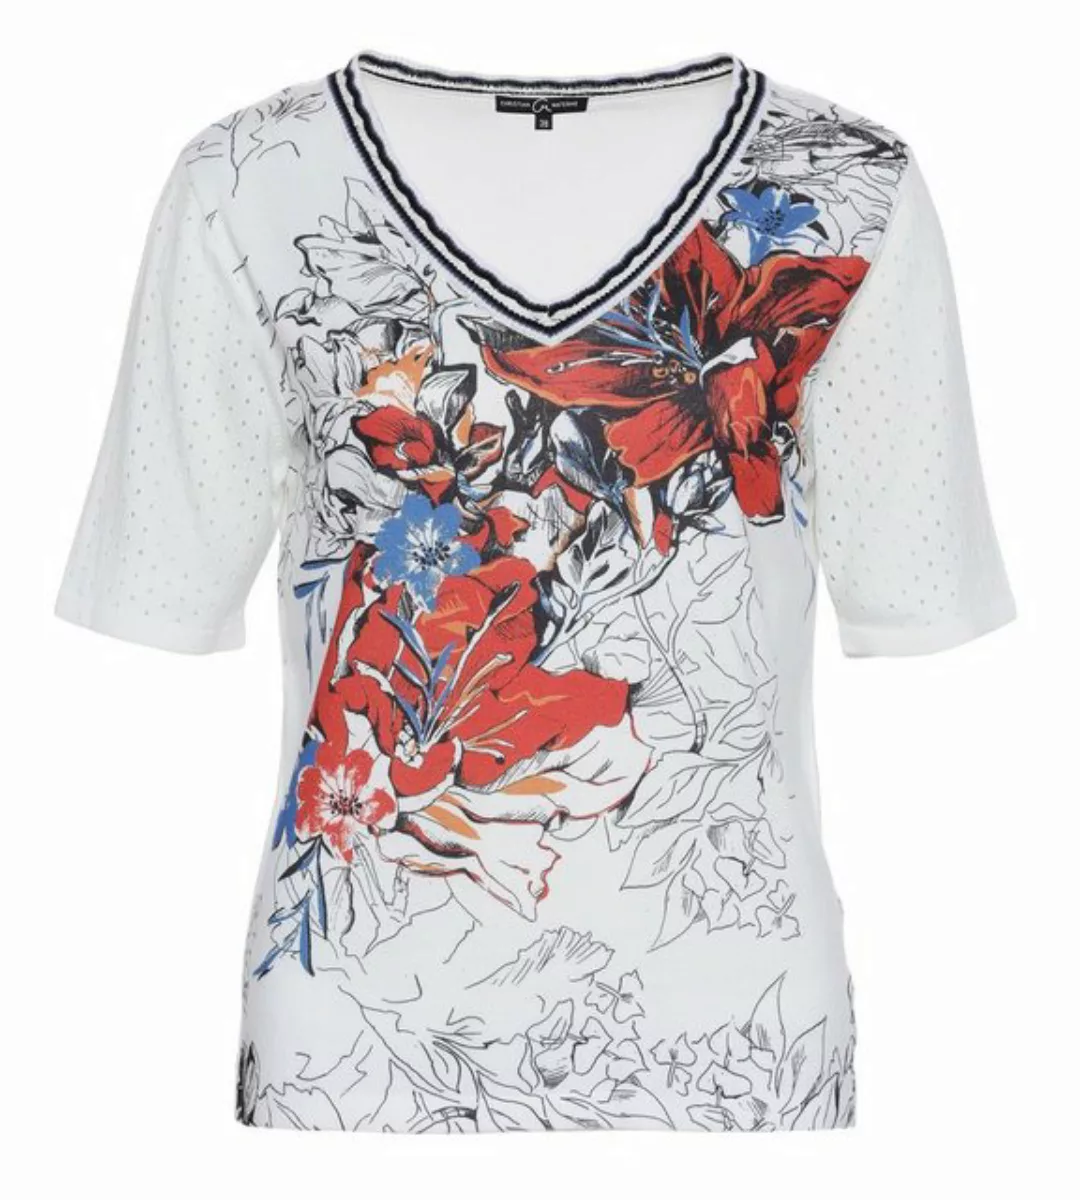 Christian Materne T-Shirt Halbarmbluse koerpernah mit platziertem Blumendru günstig online kaufen